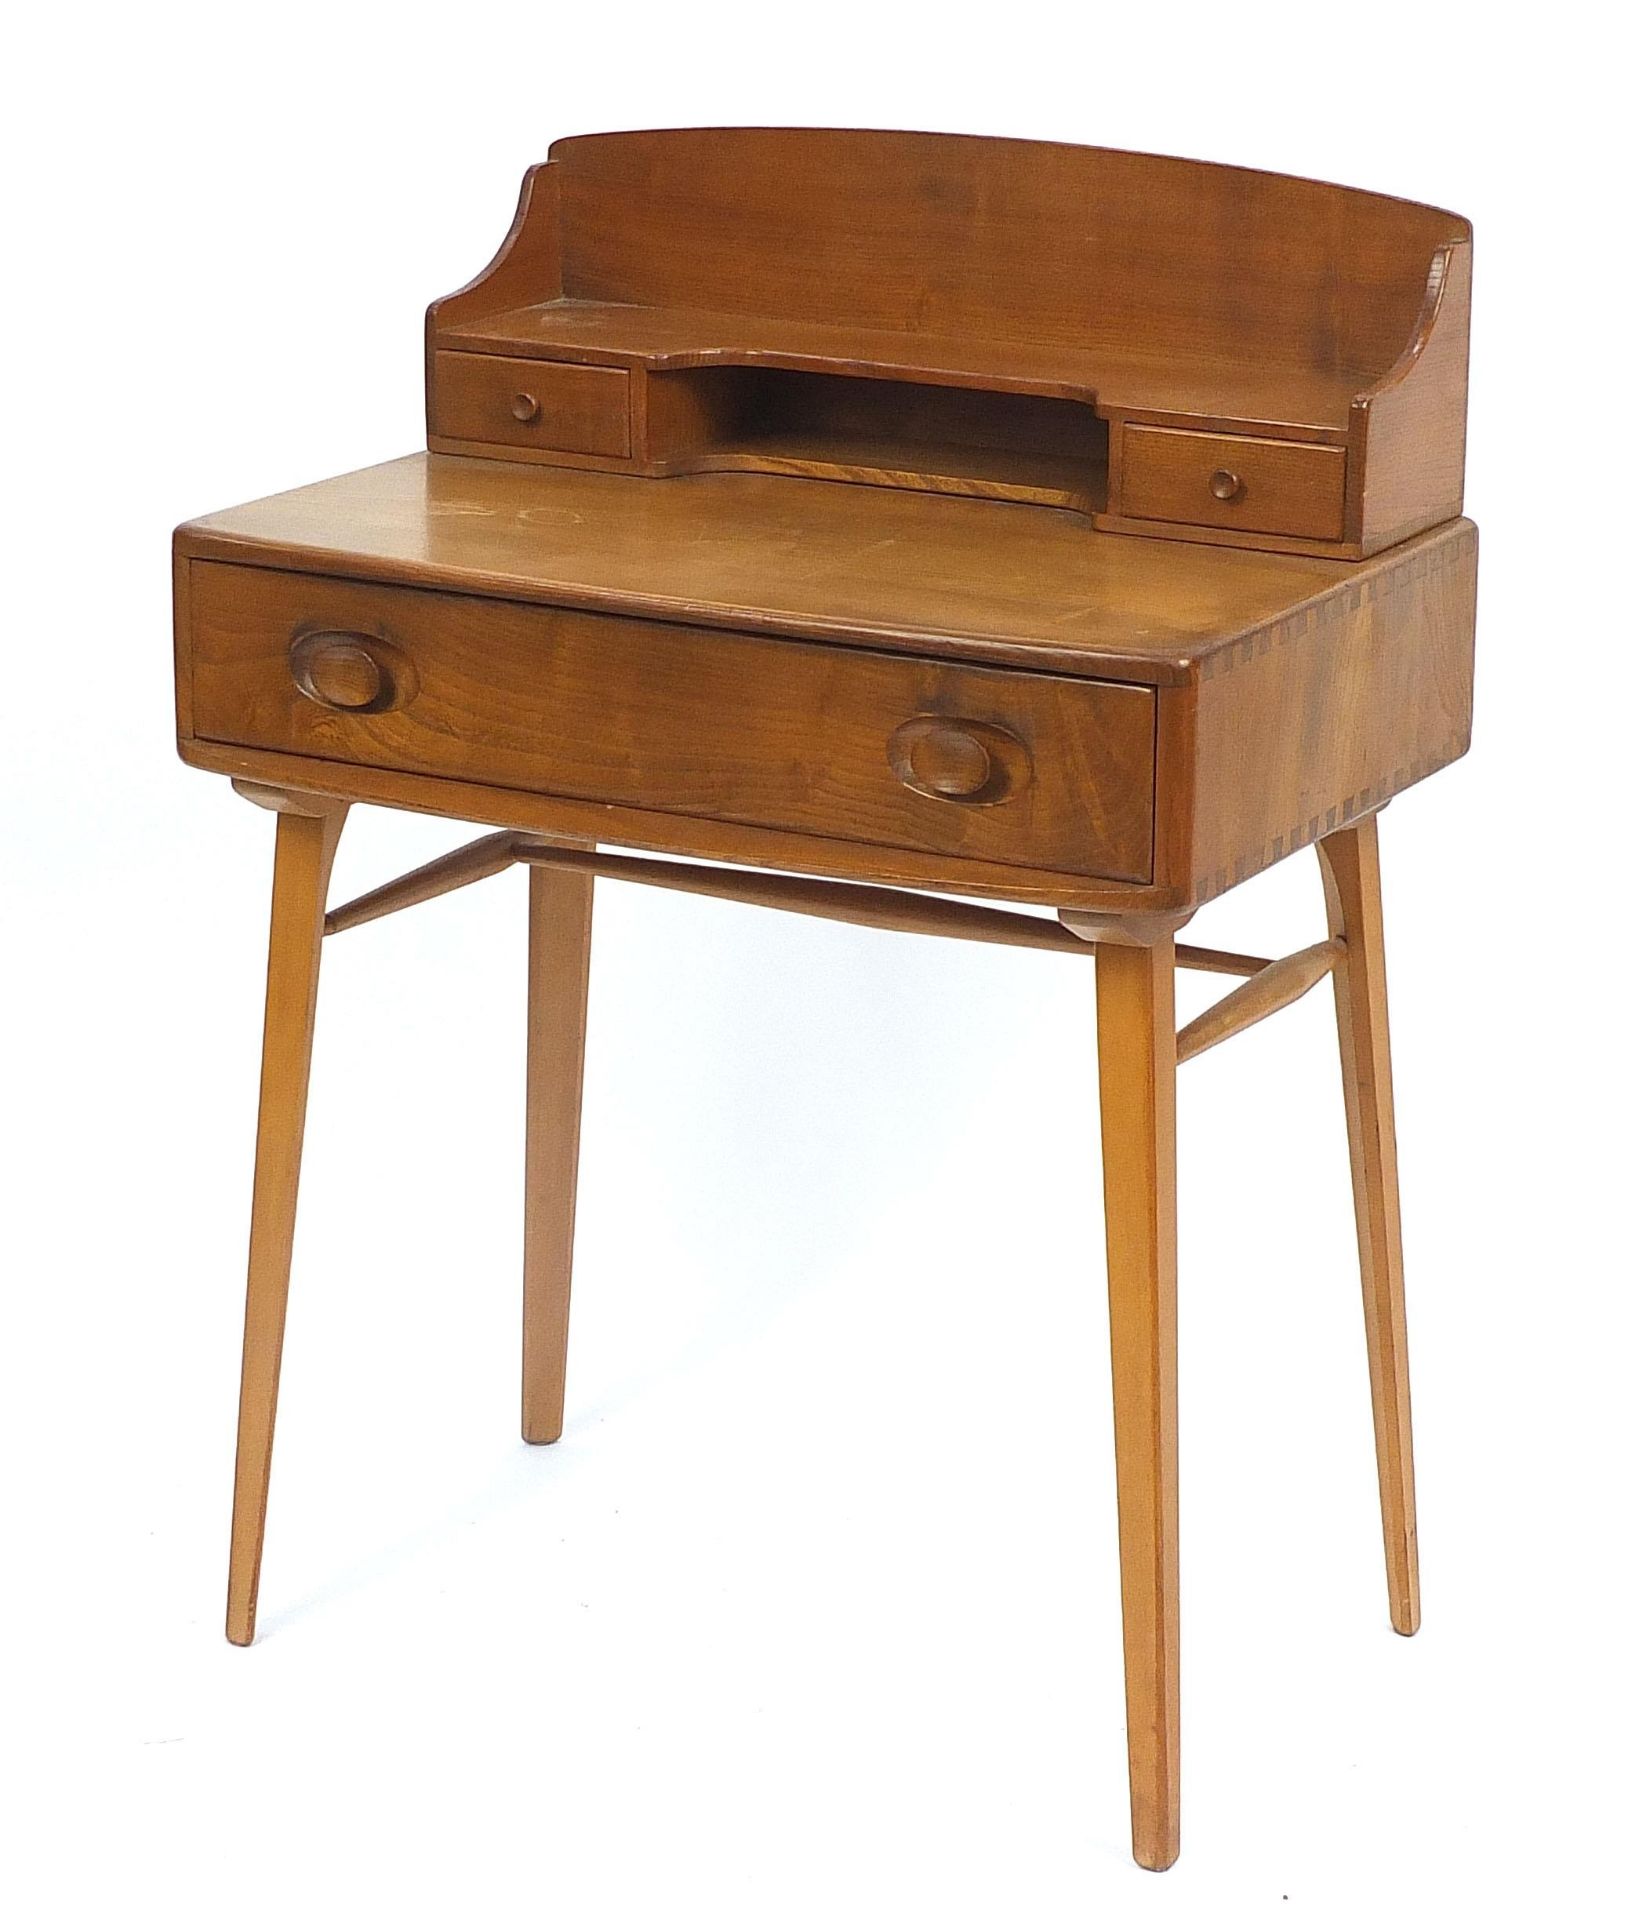 Ercol light elm dressing table with three drawers, 93cm H x 68.5cm W x 48cm D